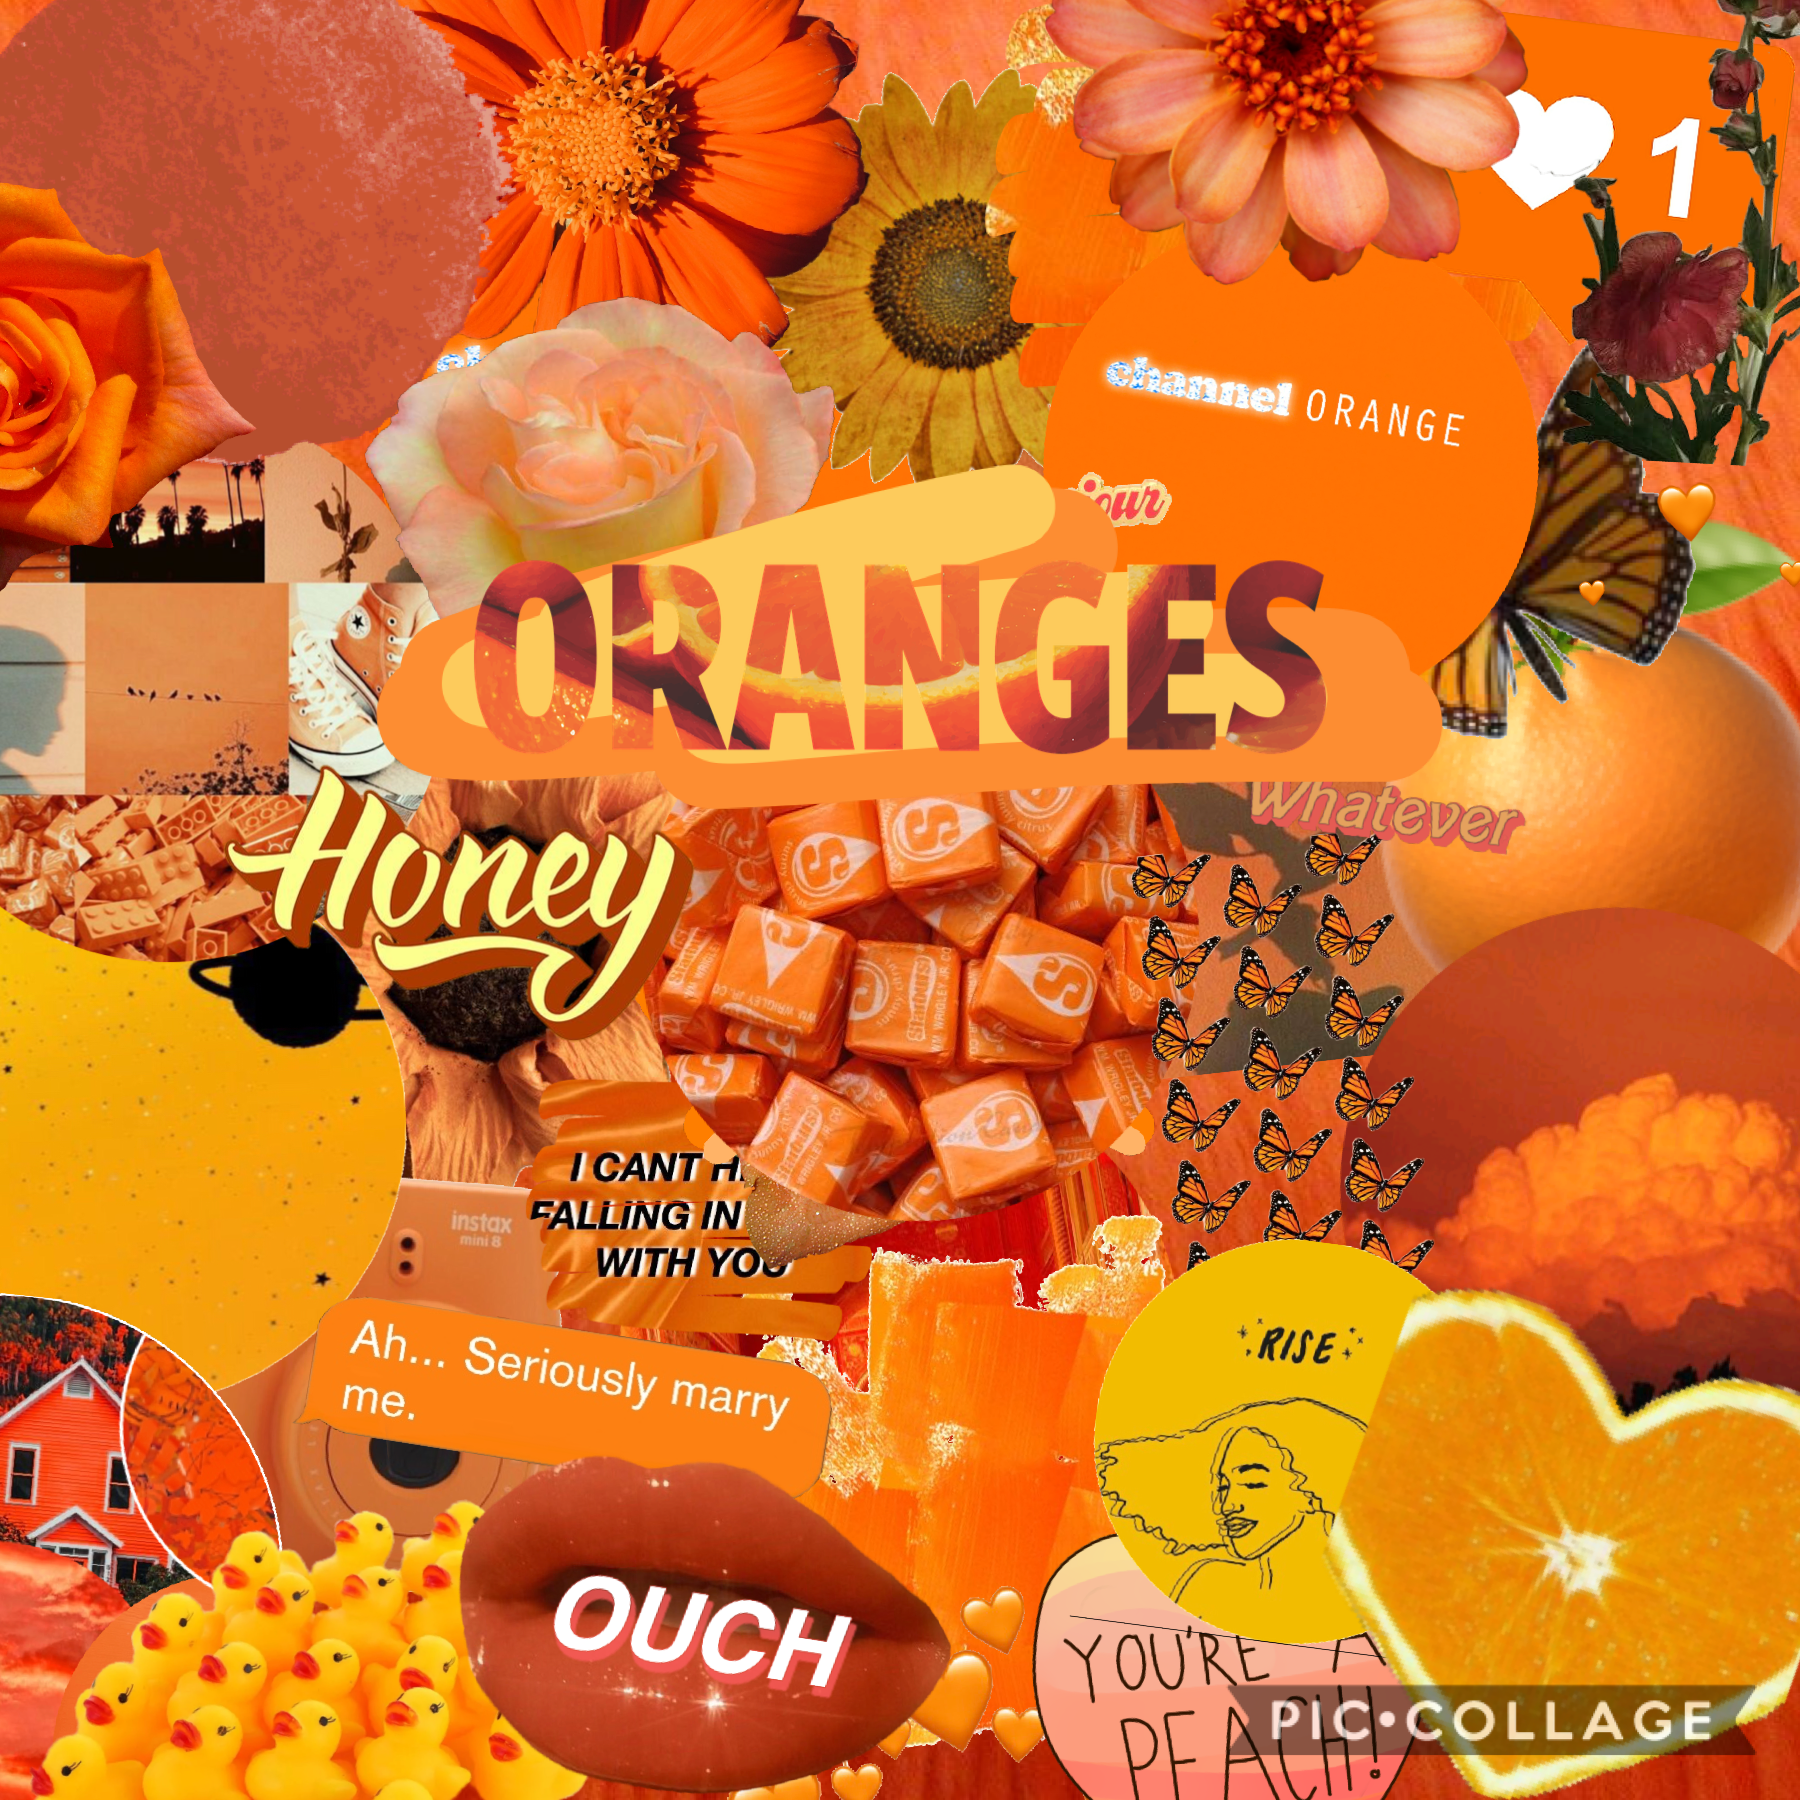 Comment your favorite orange emoji!